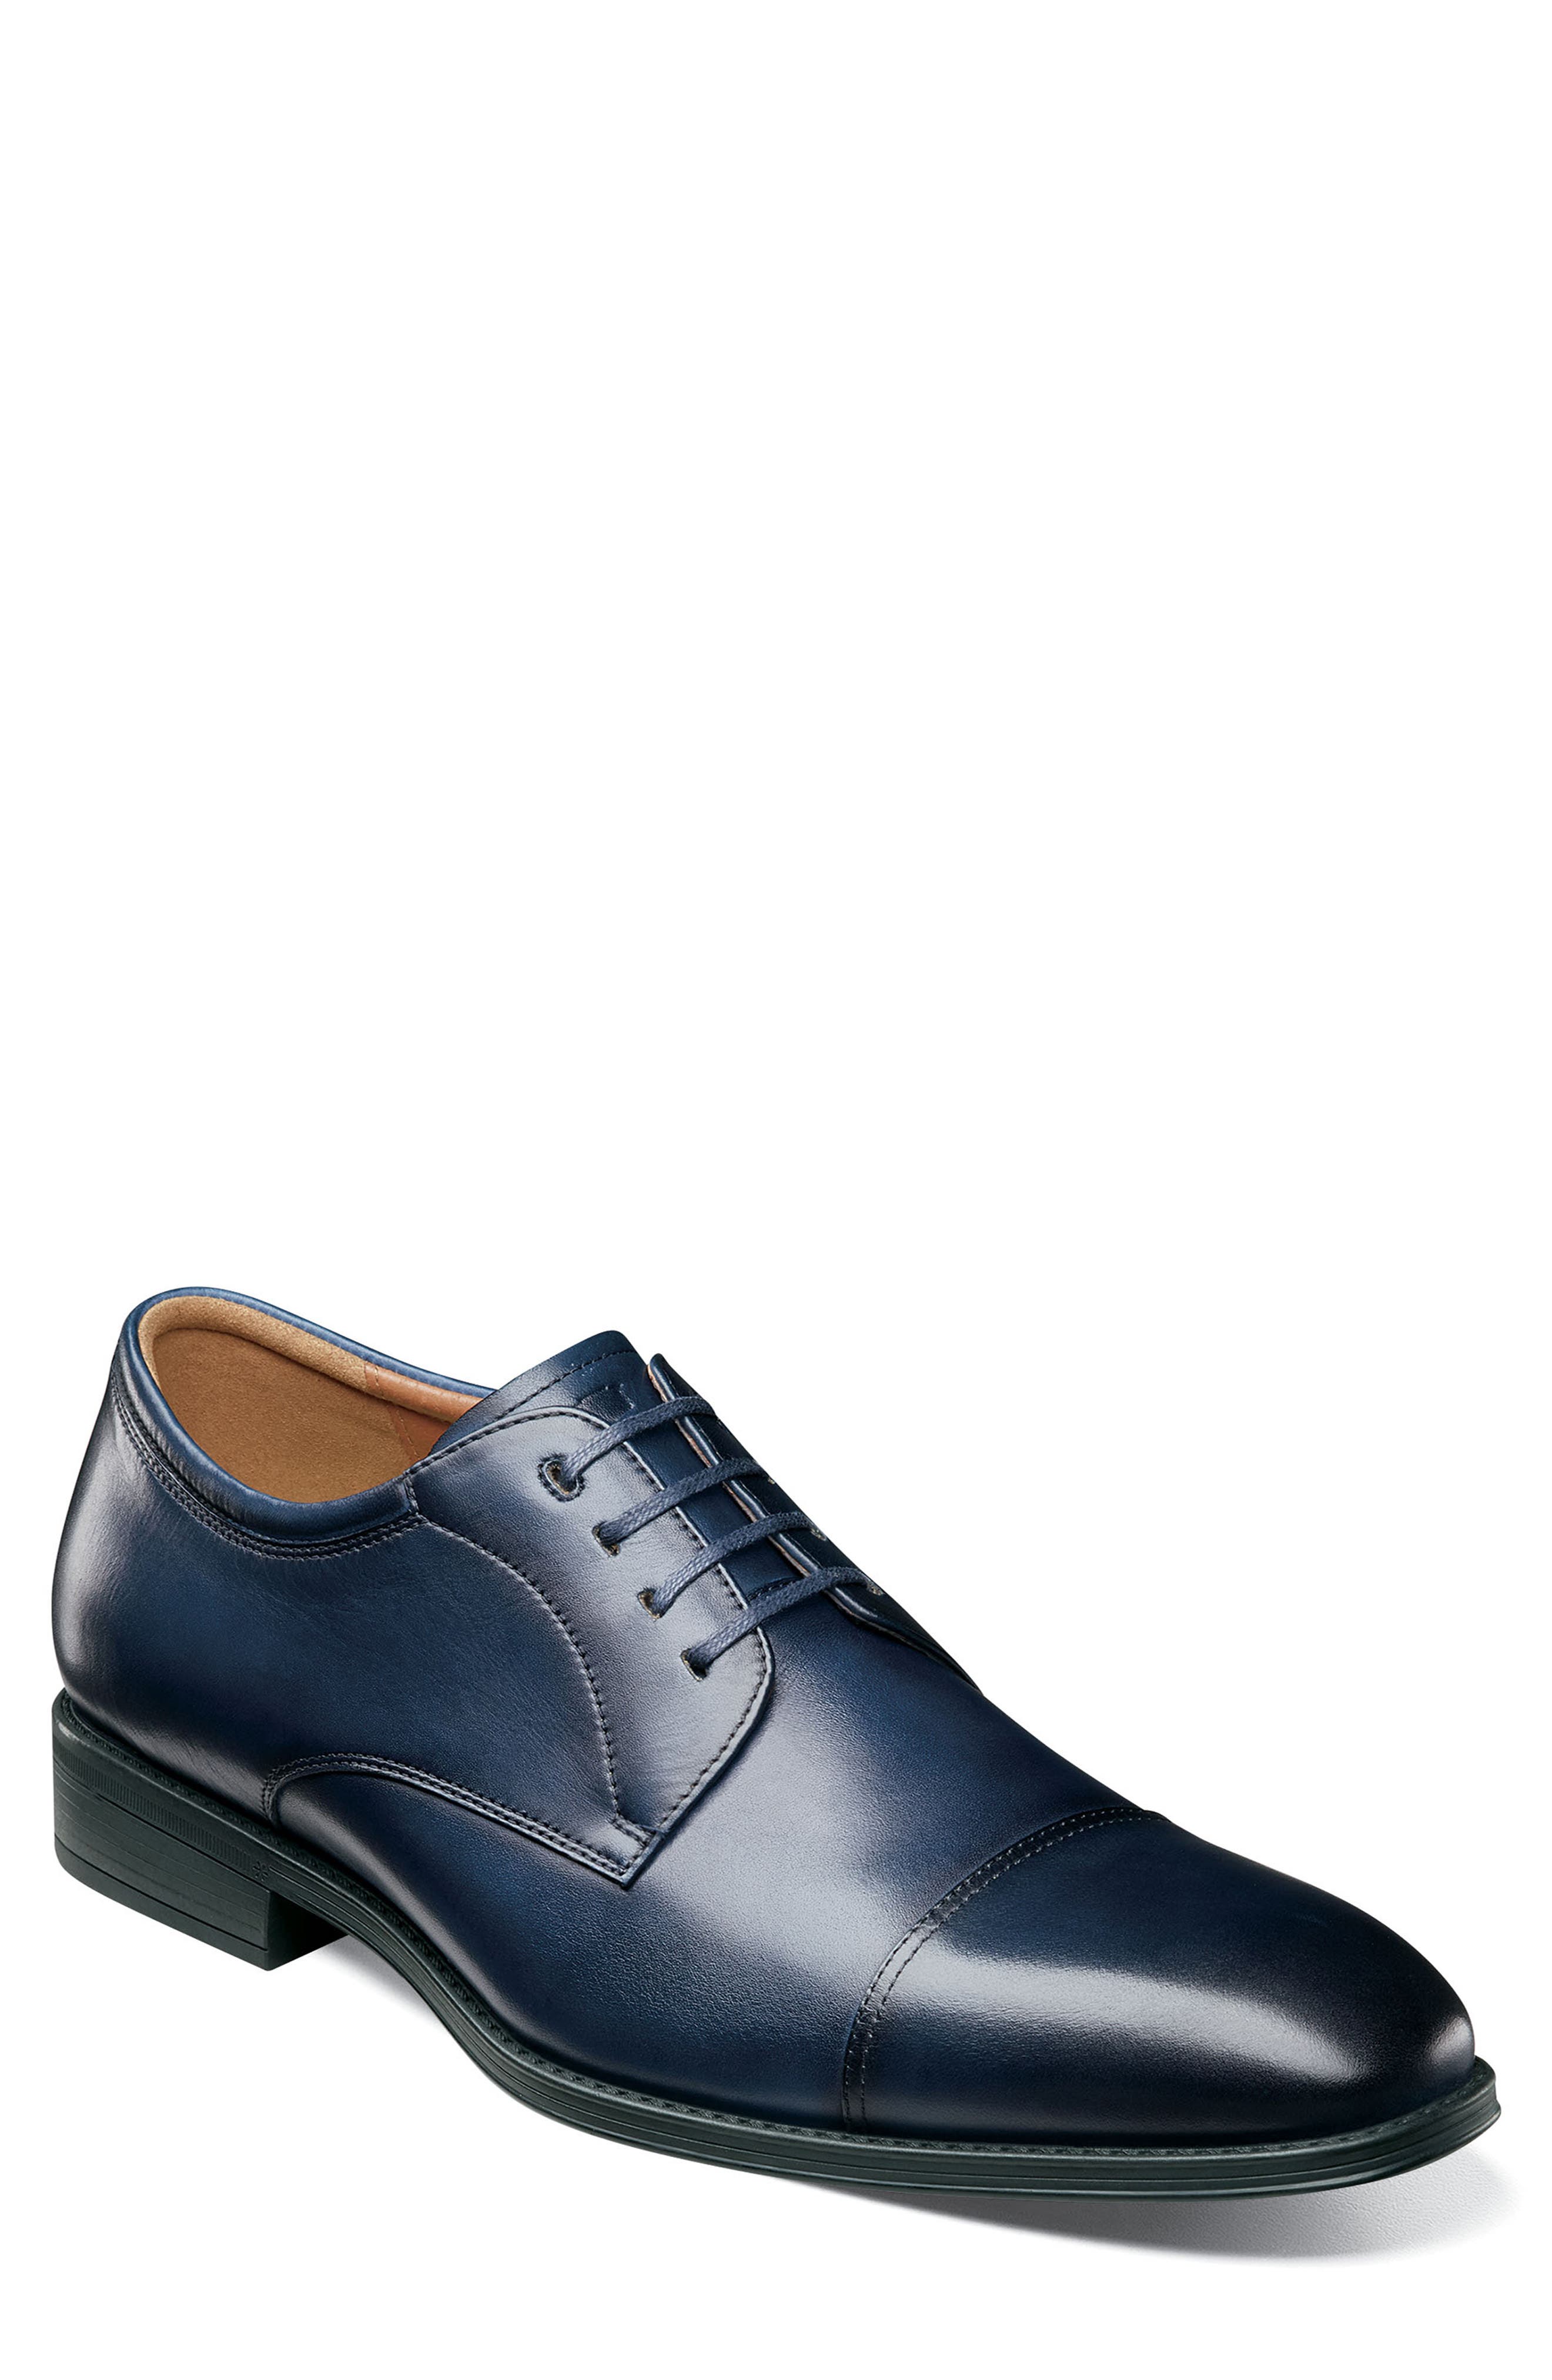 blue leather shoes mens